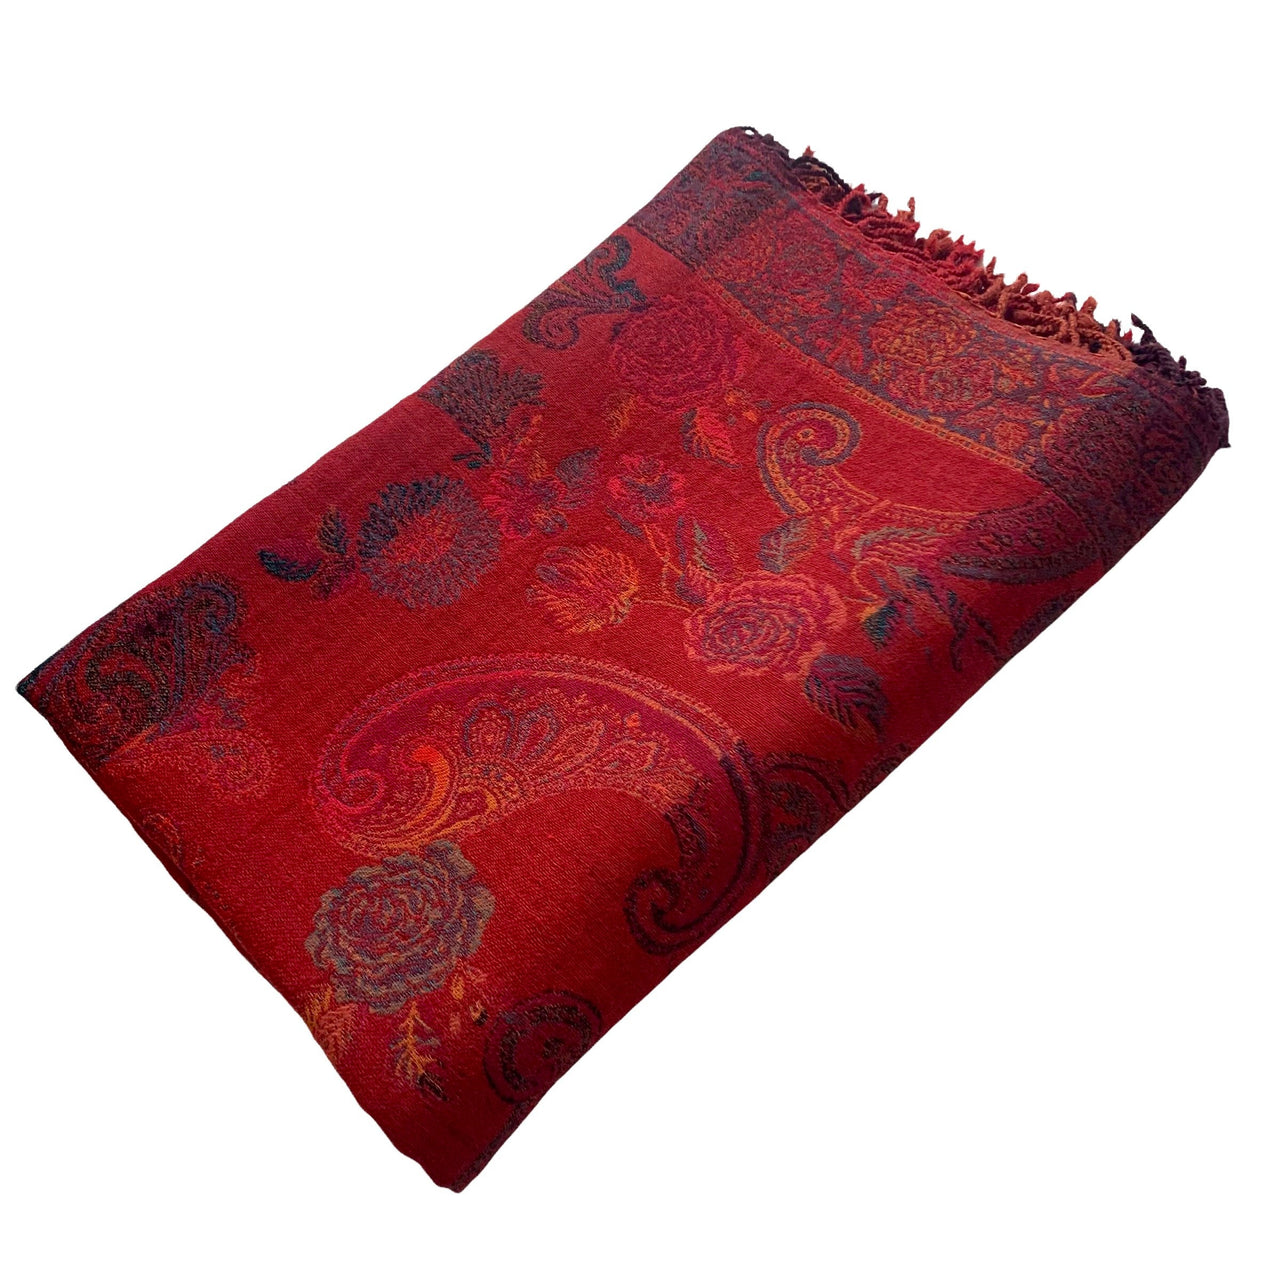 Gorgeous Red  Black  Multicoloured Reversible Boiled Wool Reversible Blanket Throw Wrap